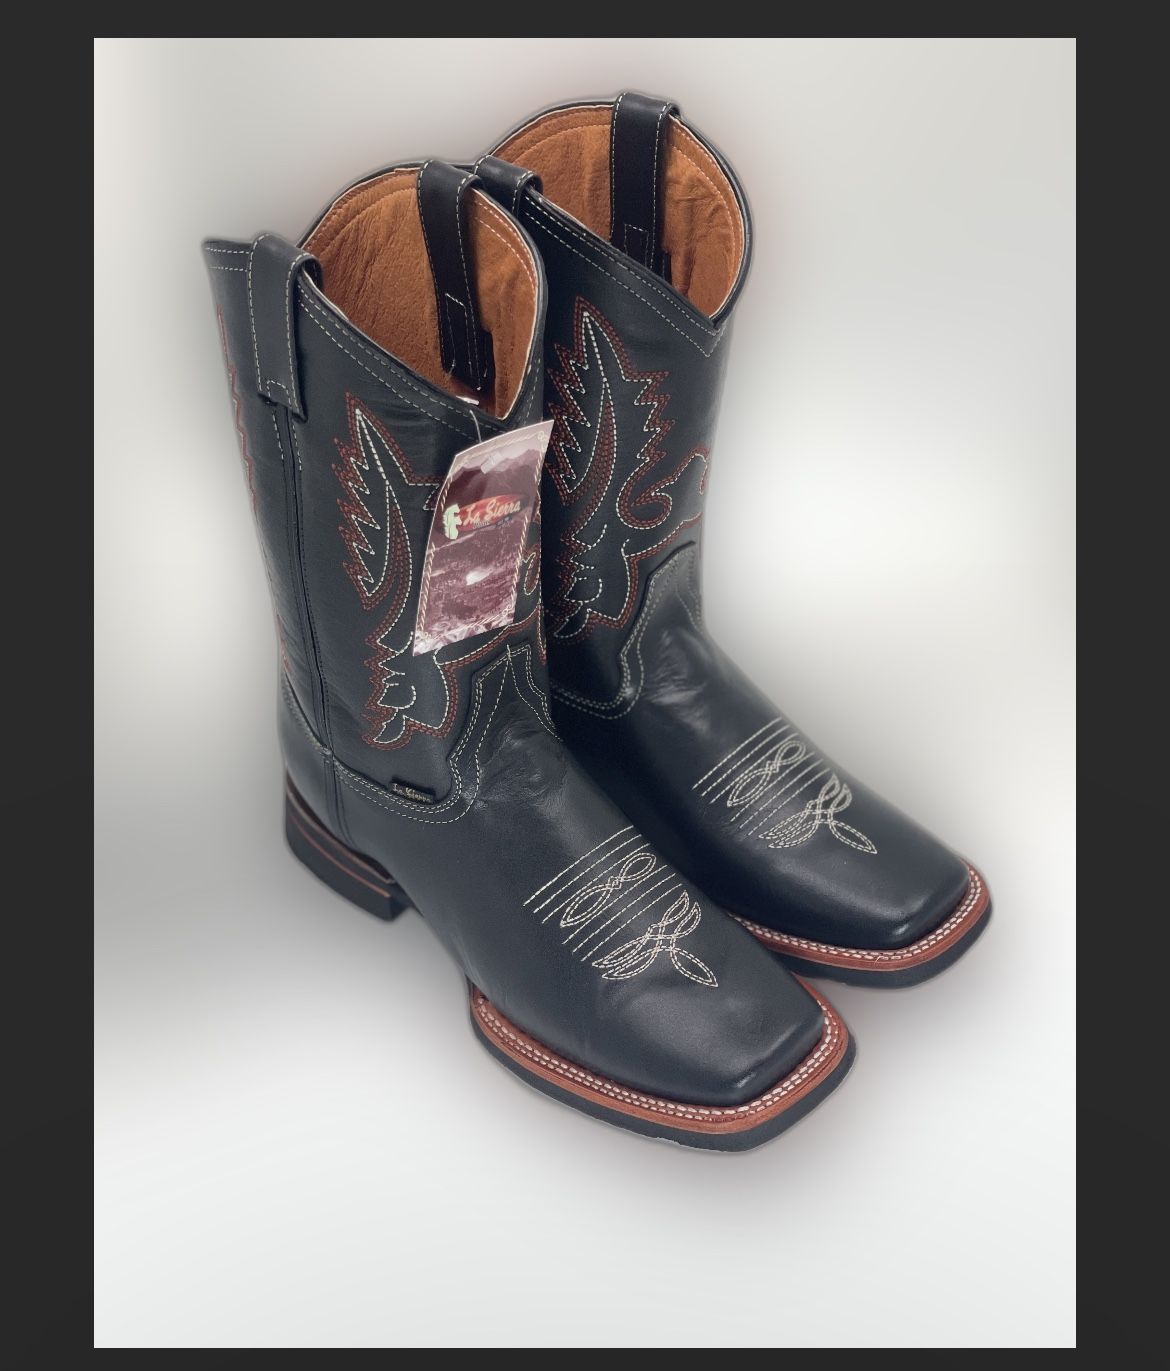 Bota Rodeo De Piel /leather Rodeo Boots 